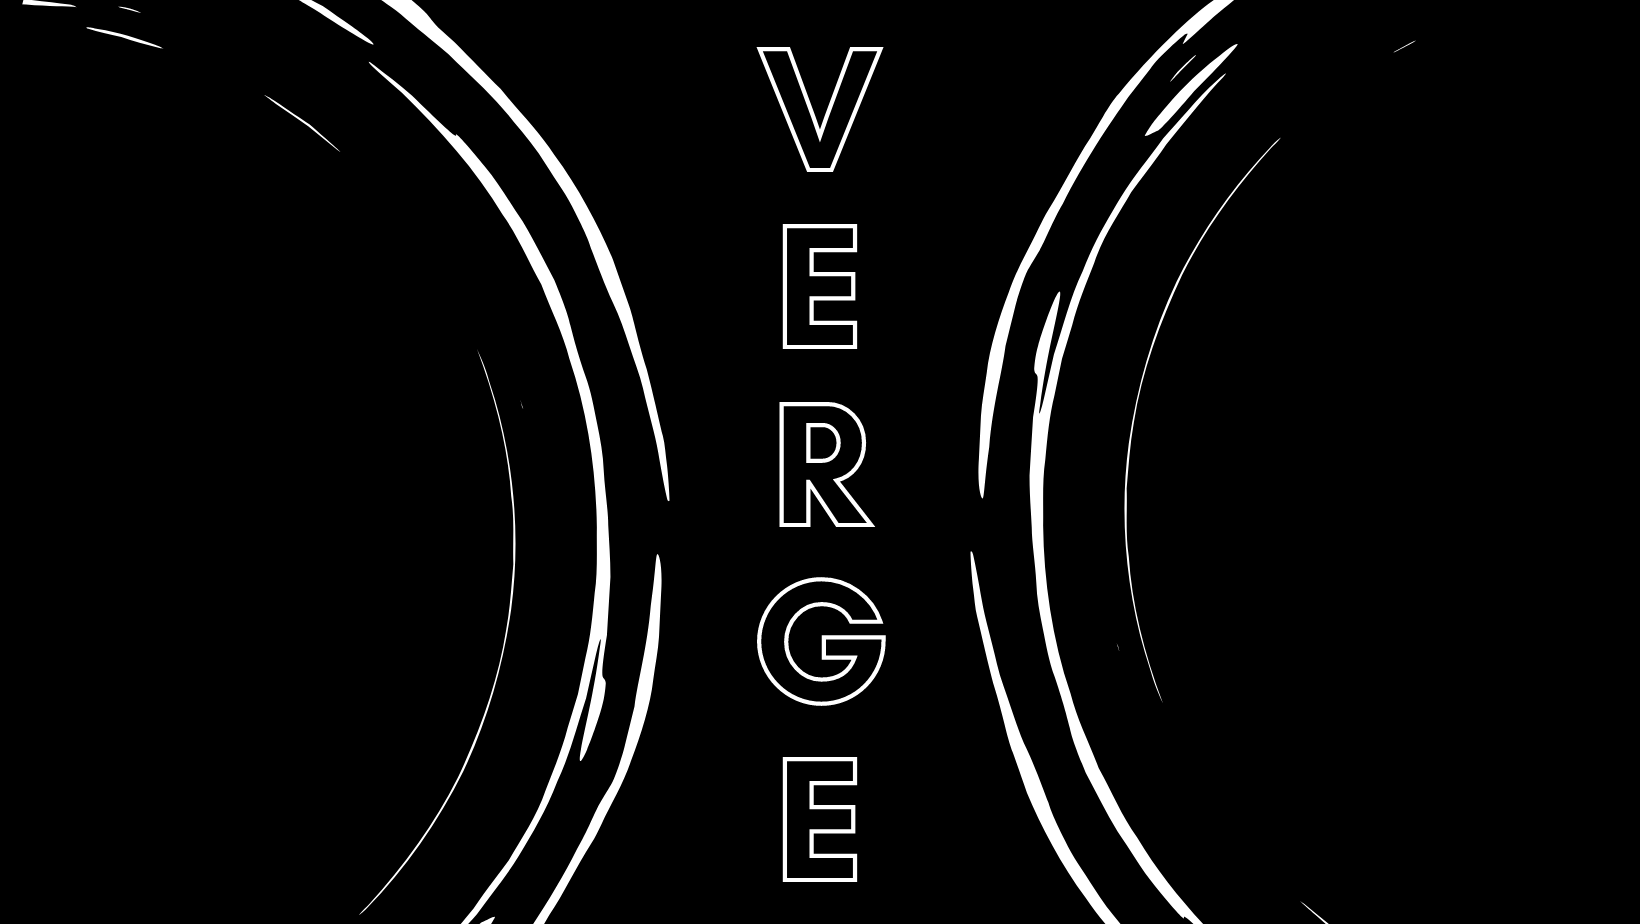 Photo of VERGE text/logo